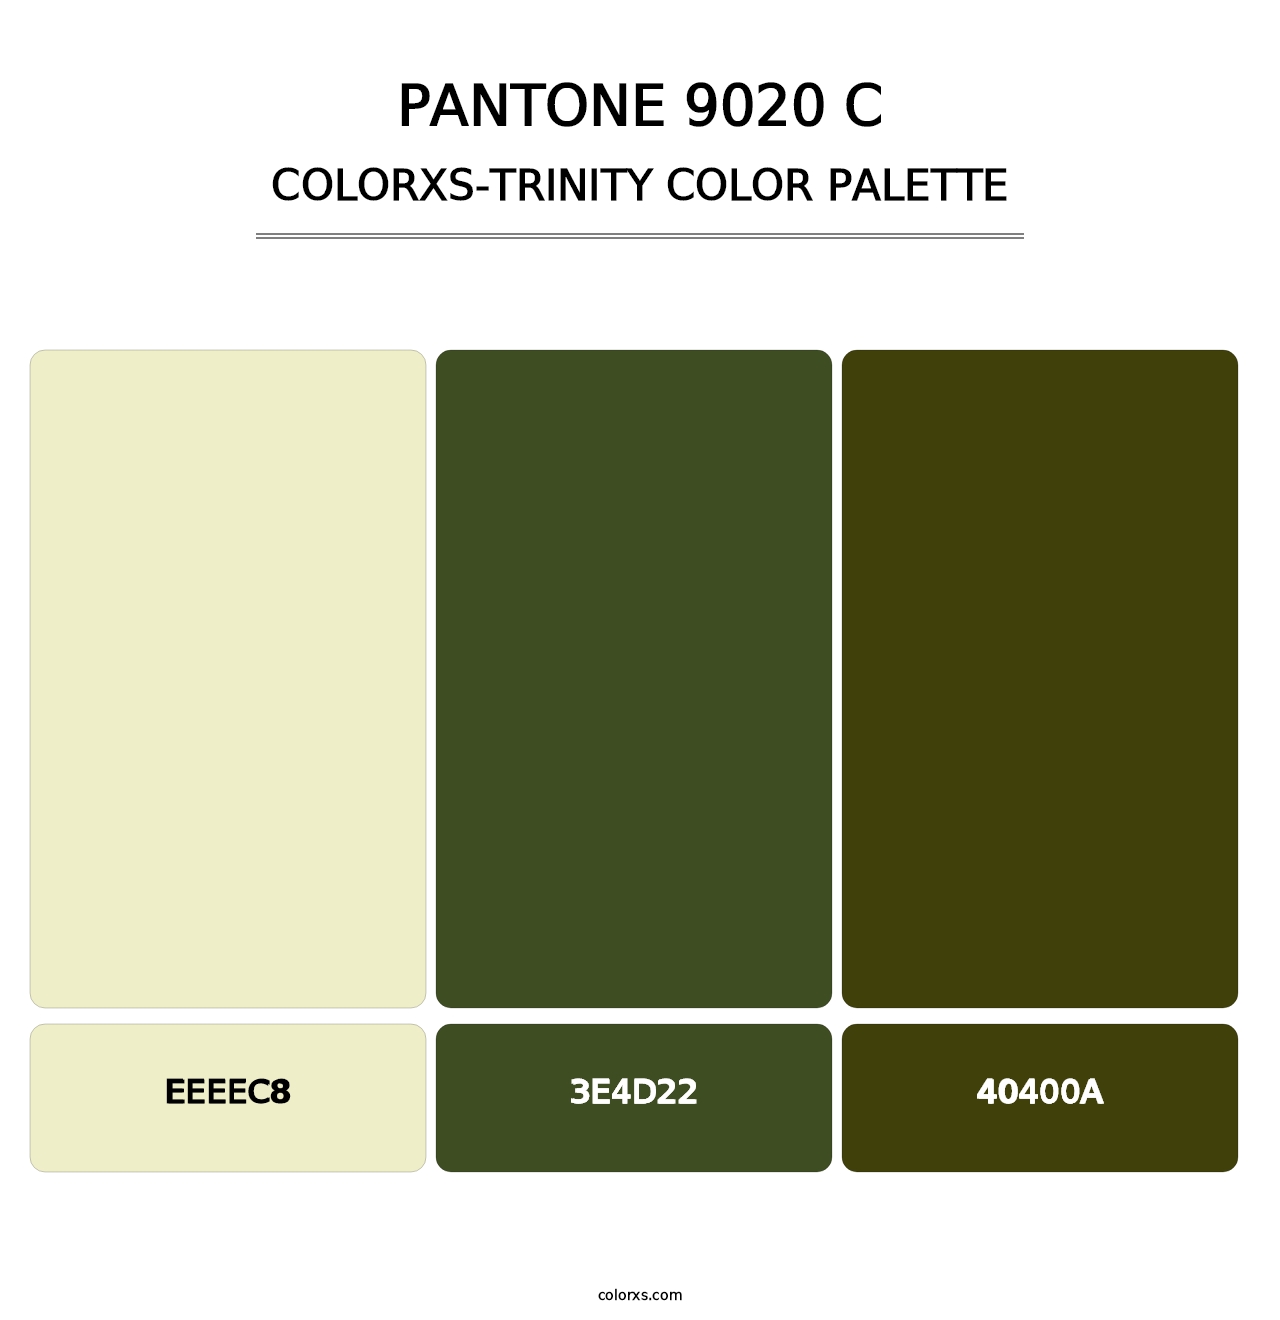 PANTONE 9020 C - Colorxs Trinity Palette